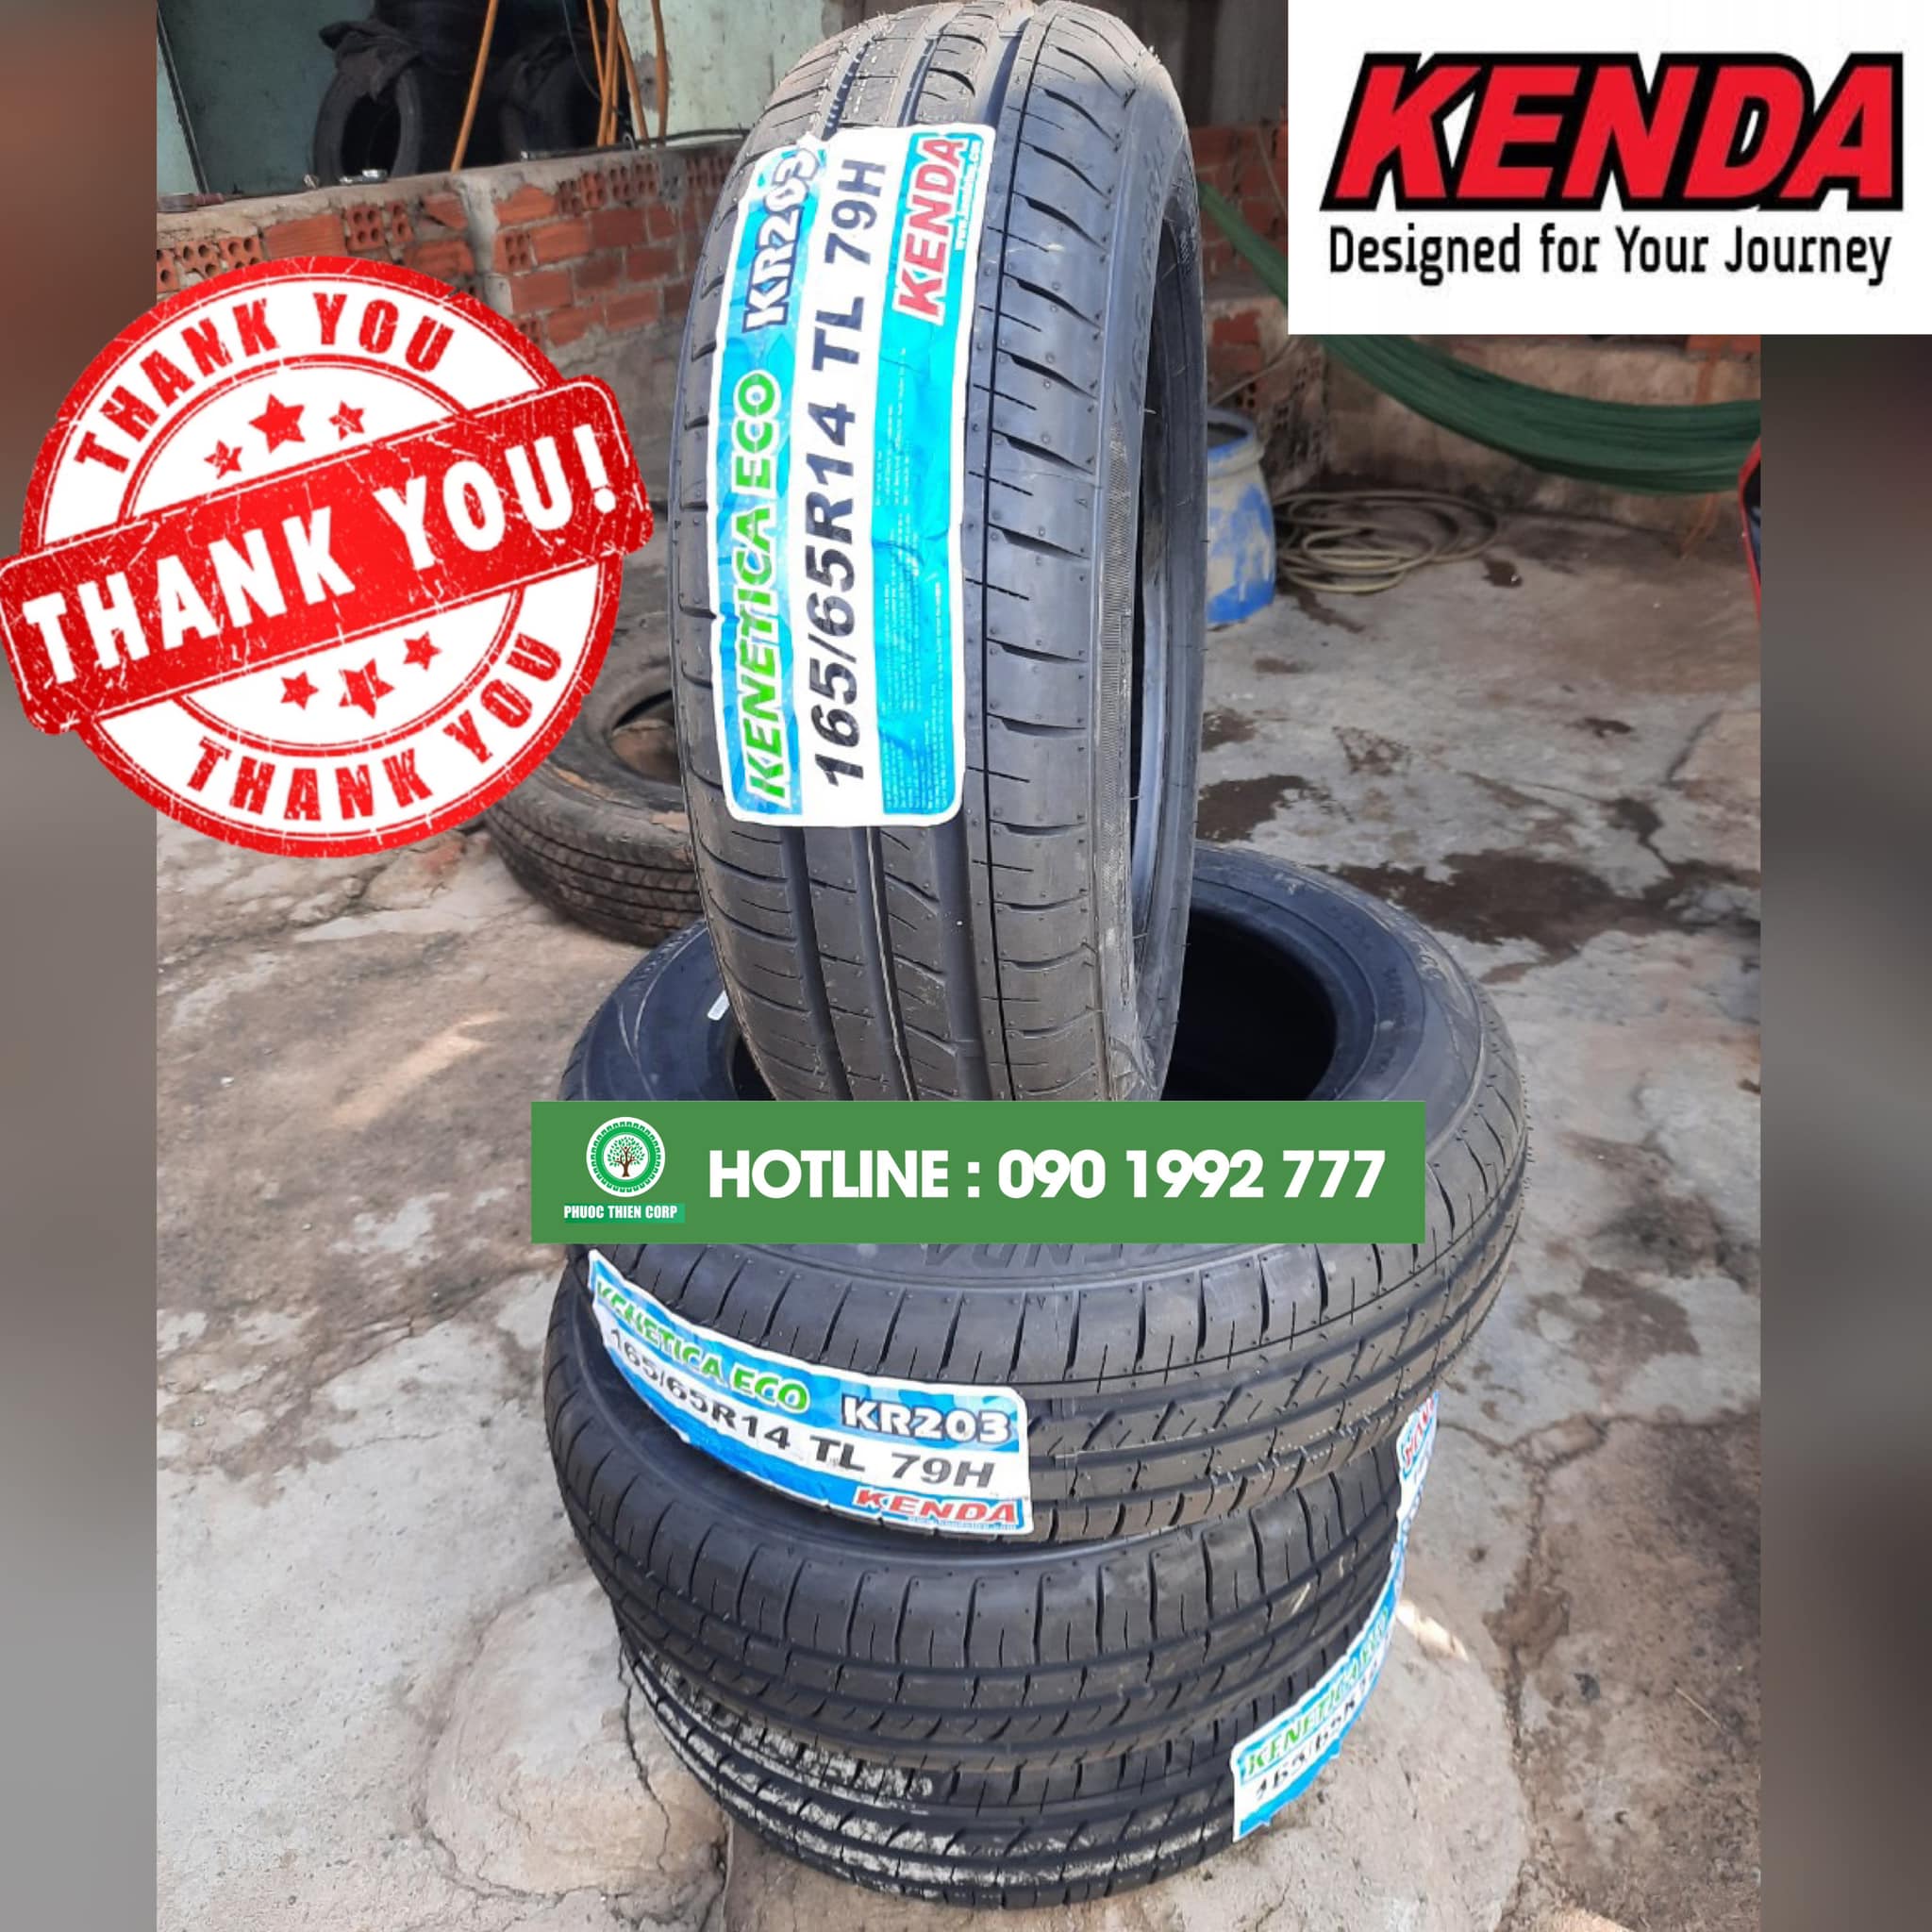 Gợi ý : Thay lốp KENDA cho xe Hyundai i10.